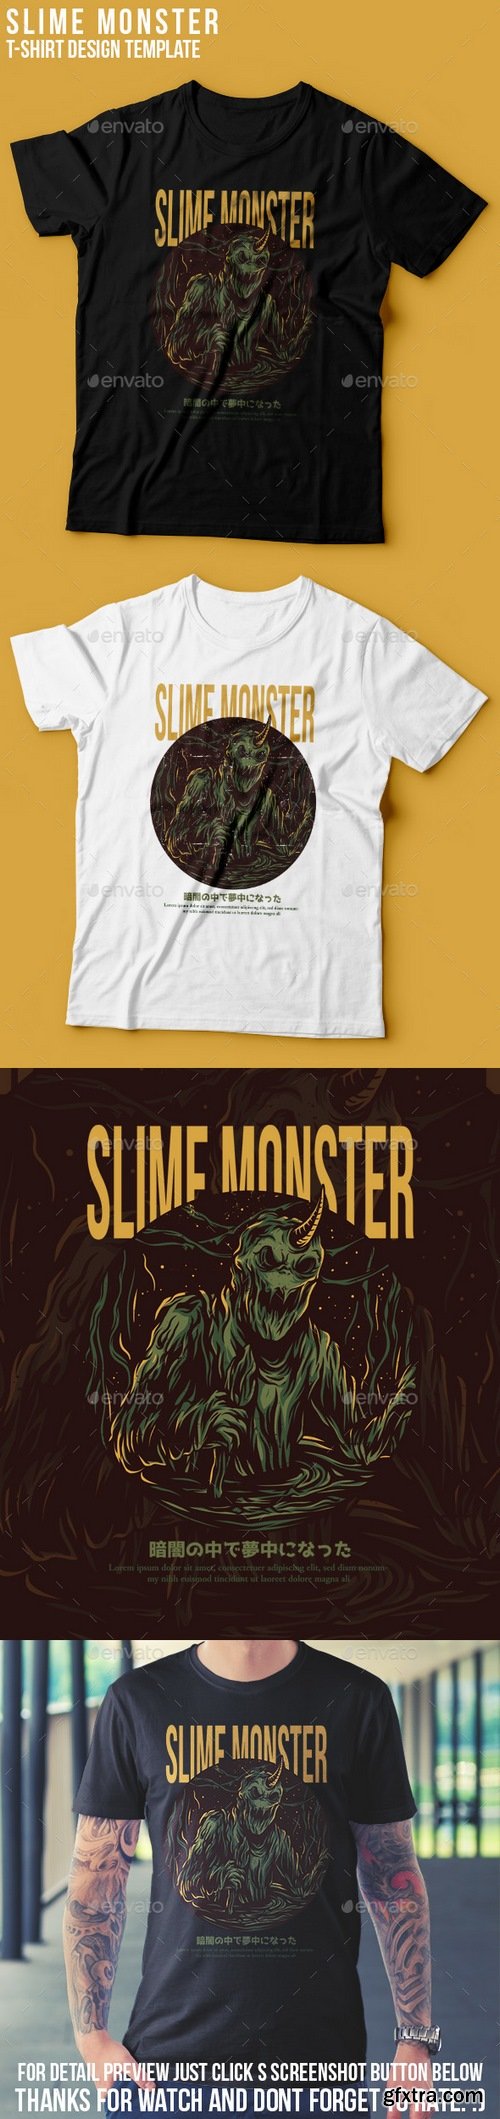 Graphicriver - Slime Monster T-Shirt Design 22801488